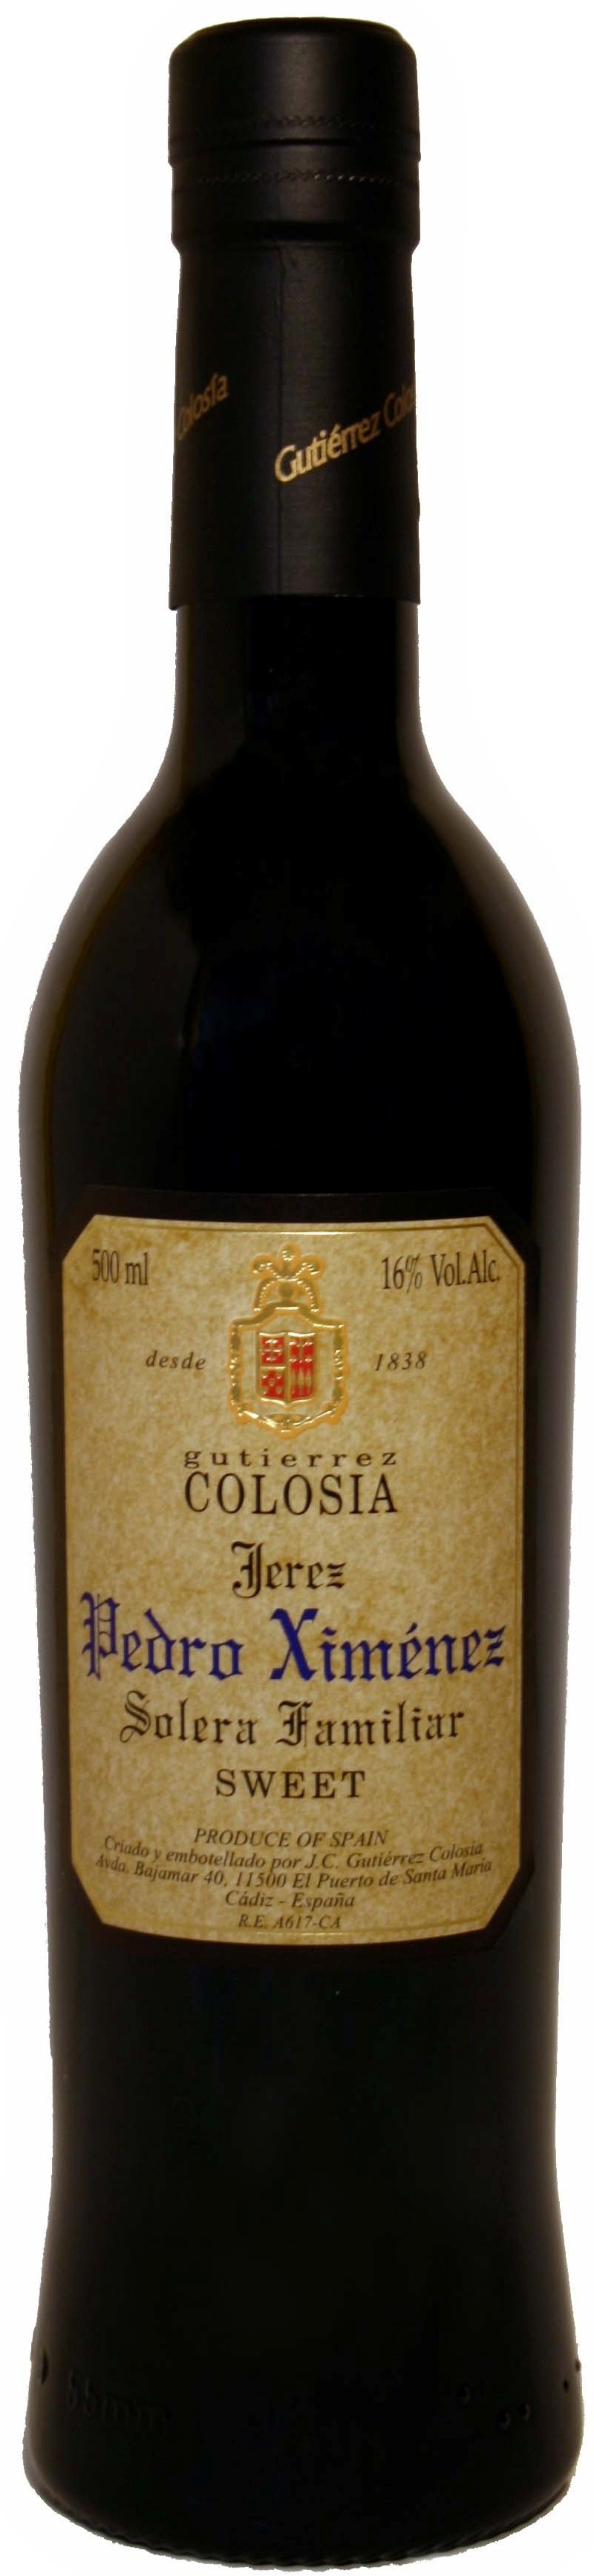 Imagen de la botella de Vino Colosía Solera Familiar Pedro Ximénez